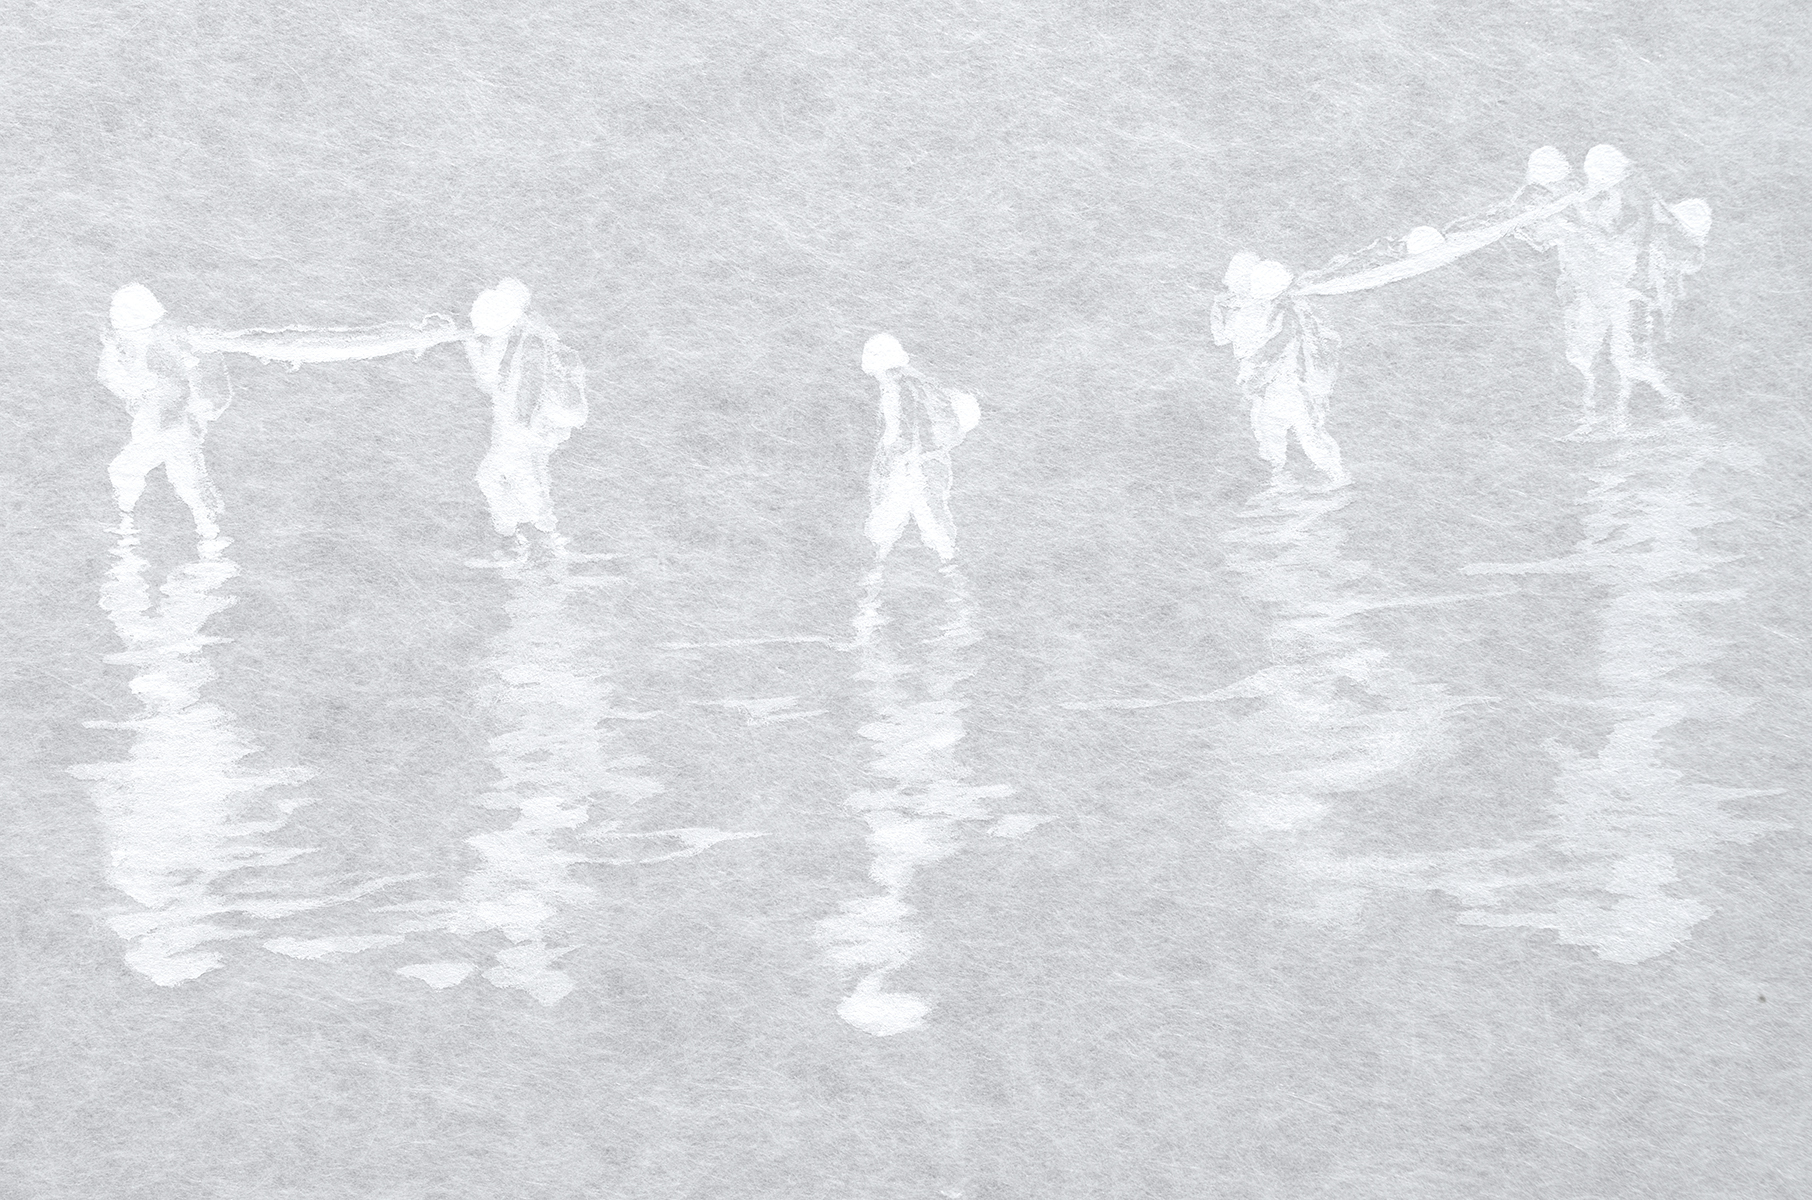 a drawing of people walking across water